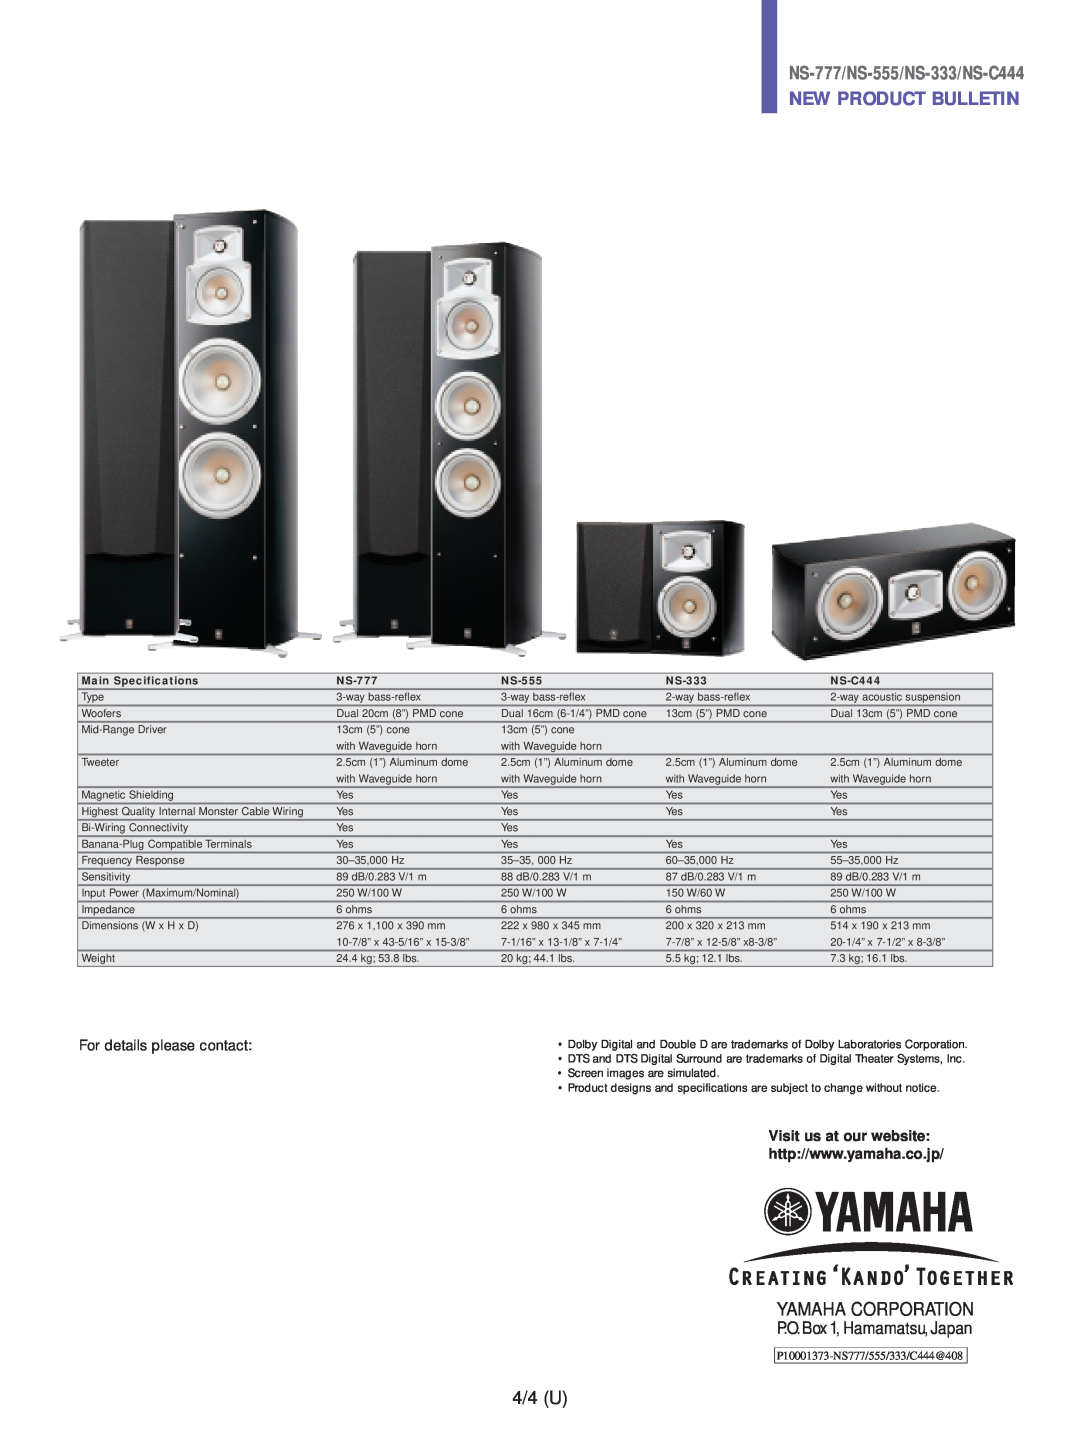 Yamaha manual NS-777/NS-555/NS-333/NS-C444, New Product Bulletin, Yamaha Corporation, For details please contact 